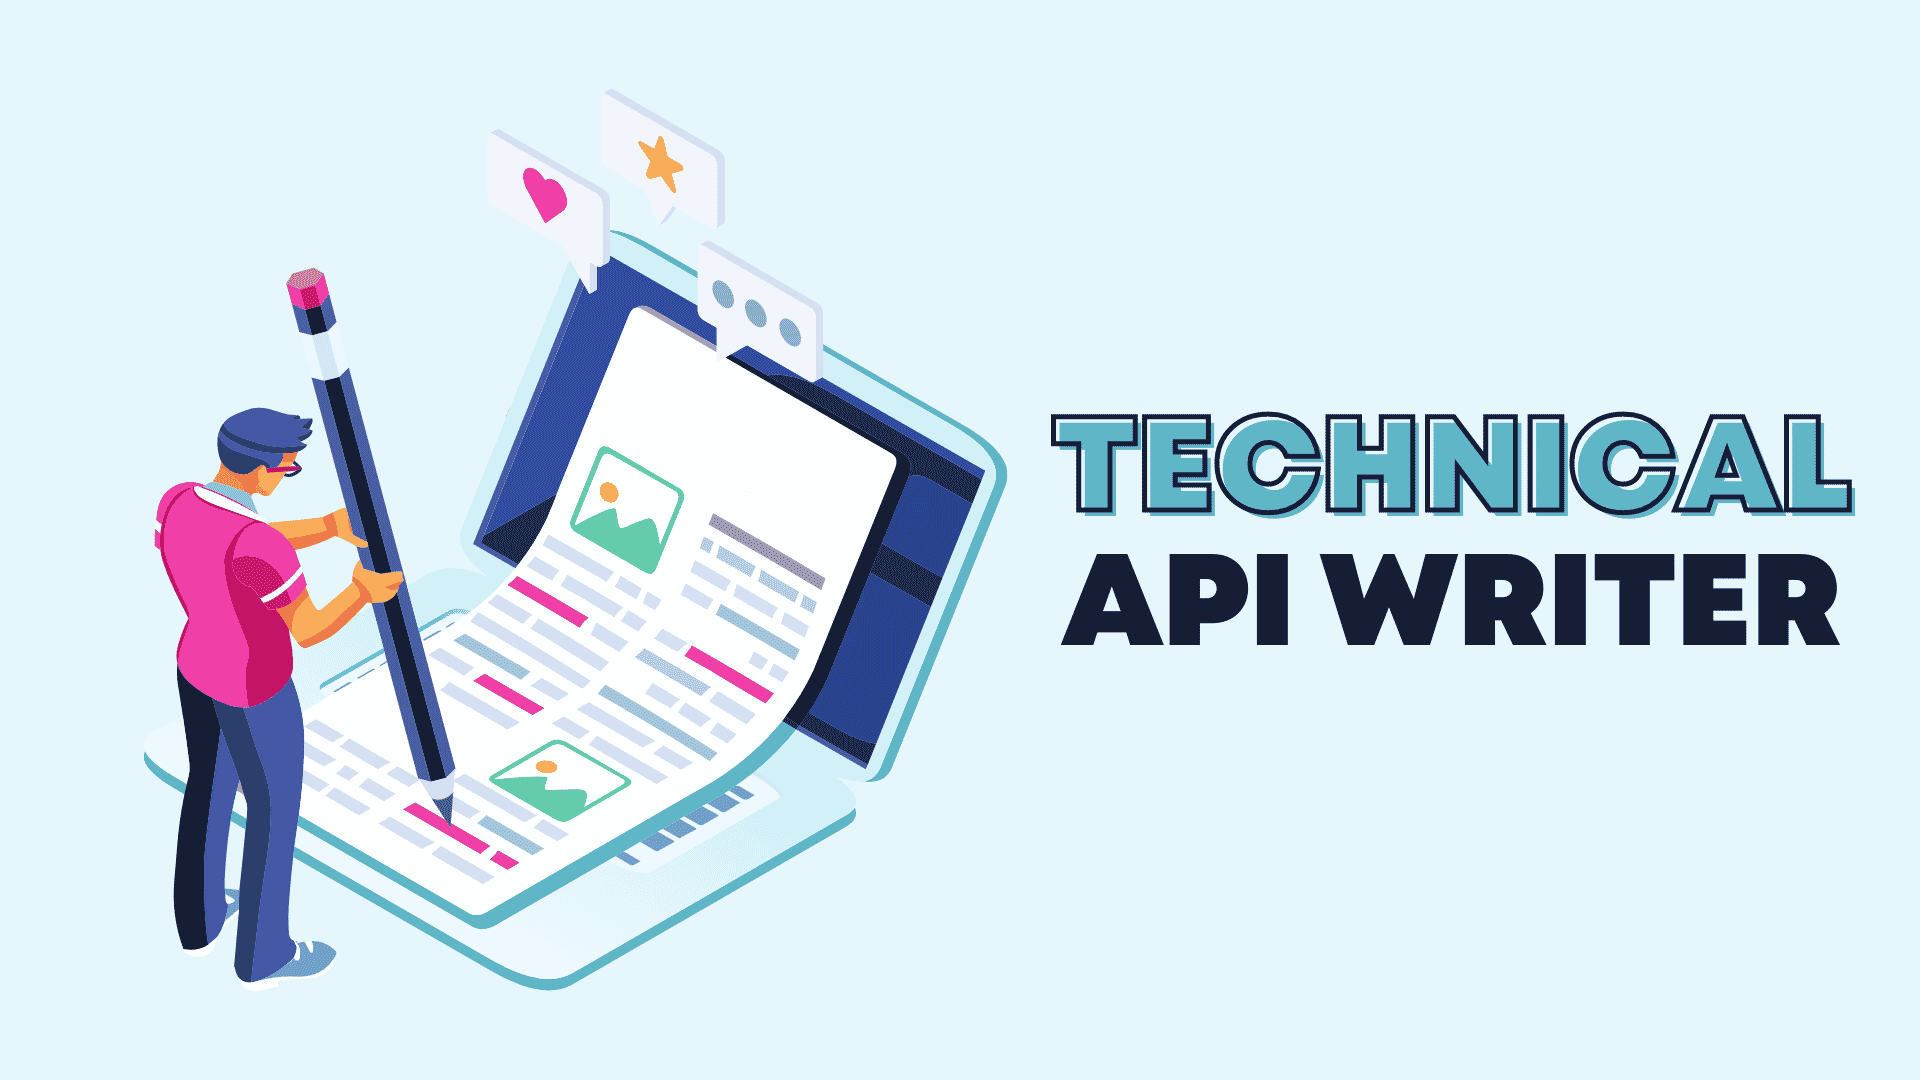 Technical API writers